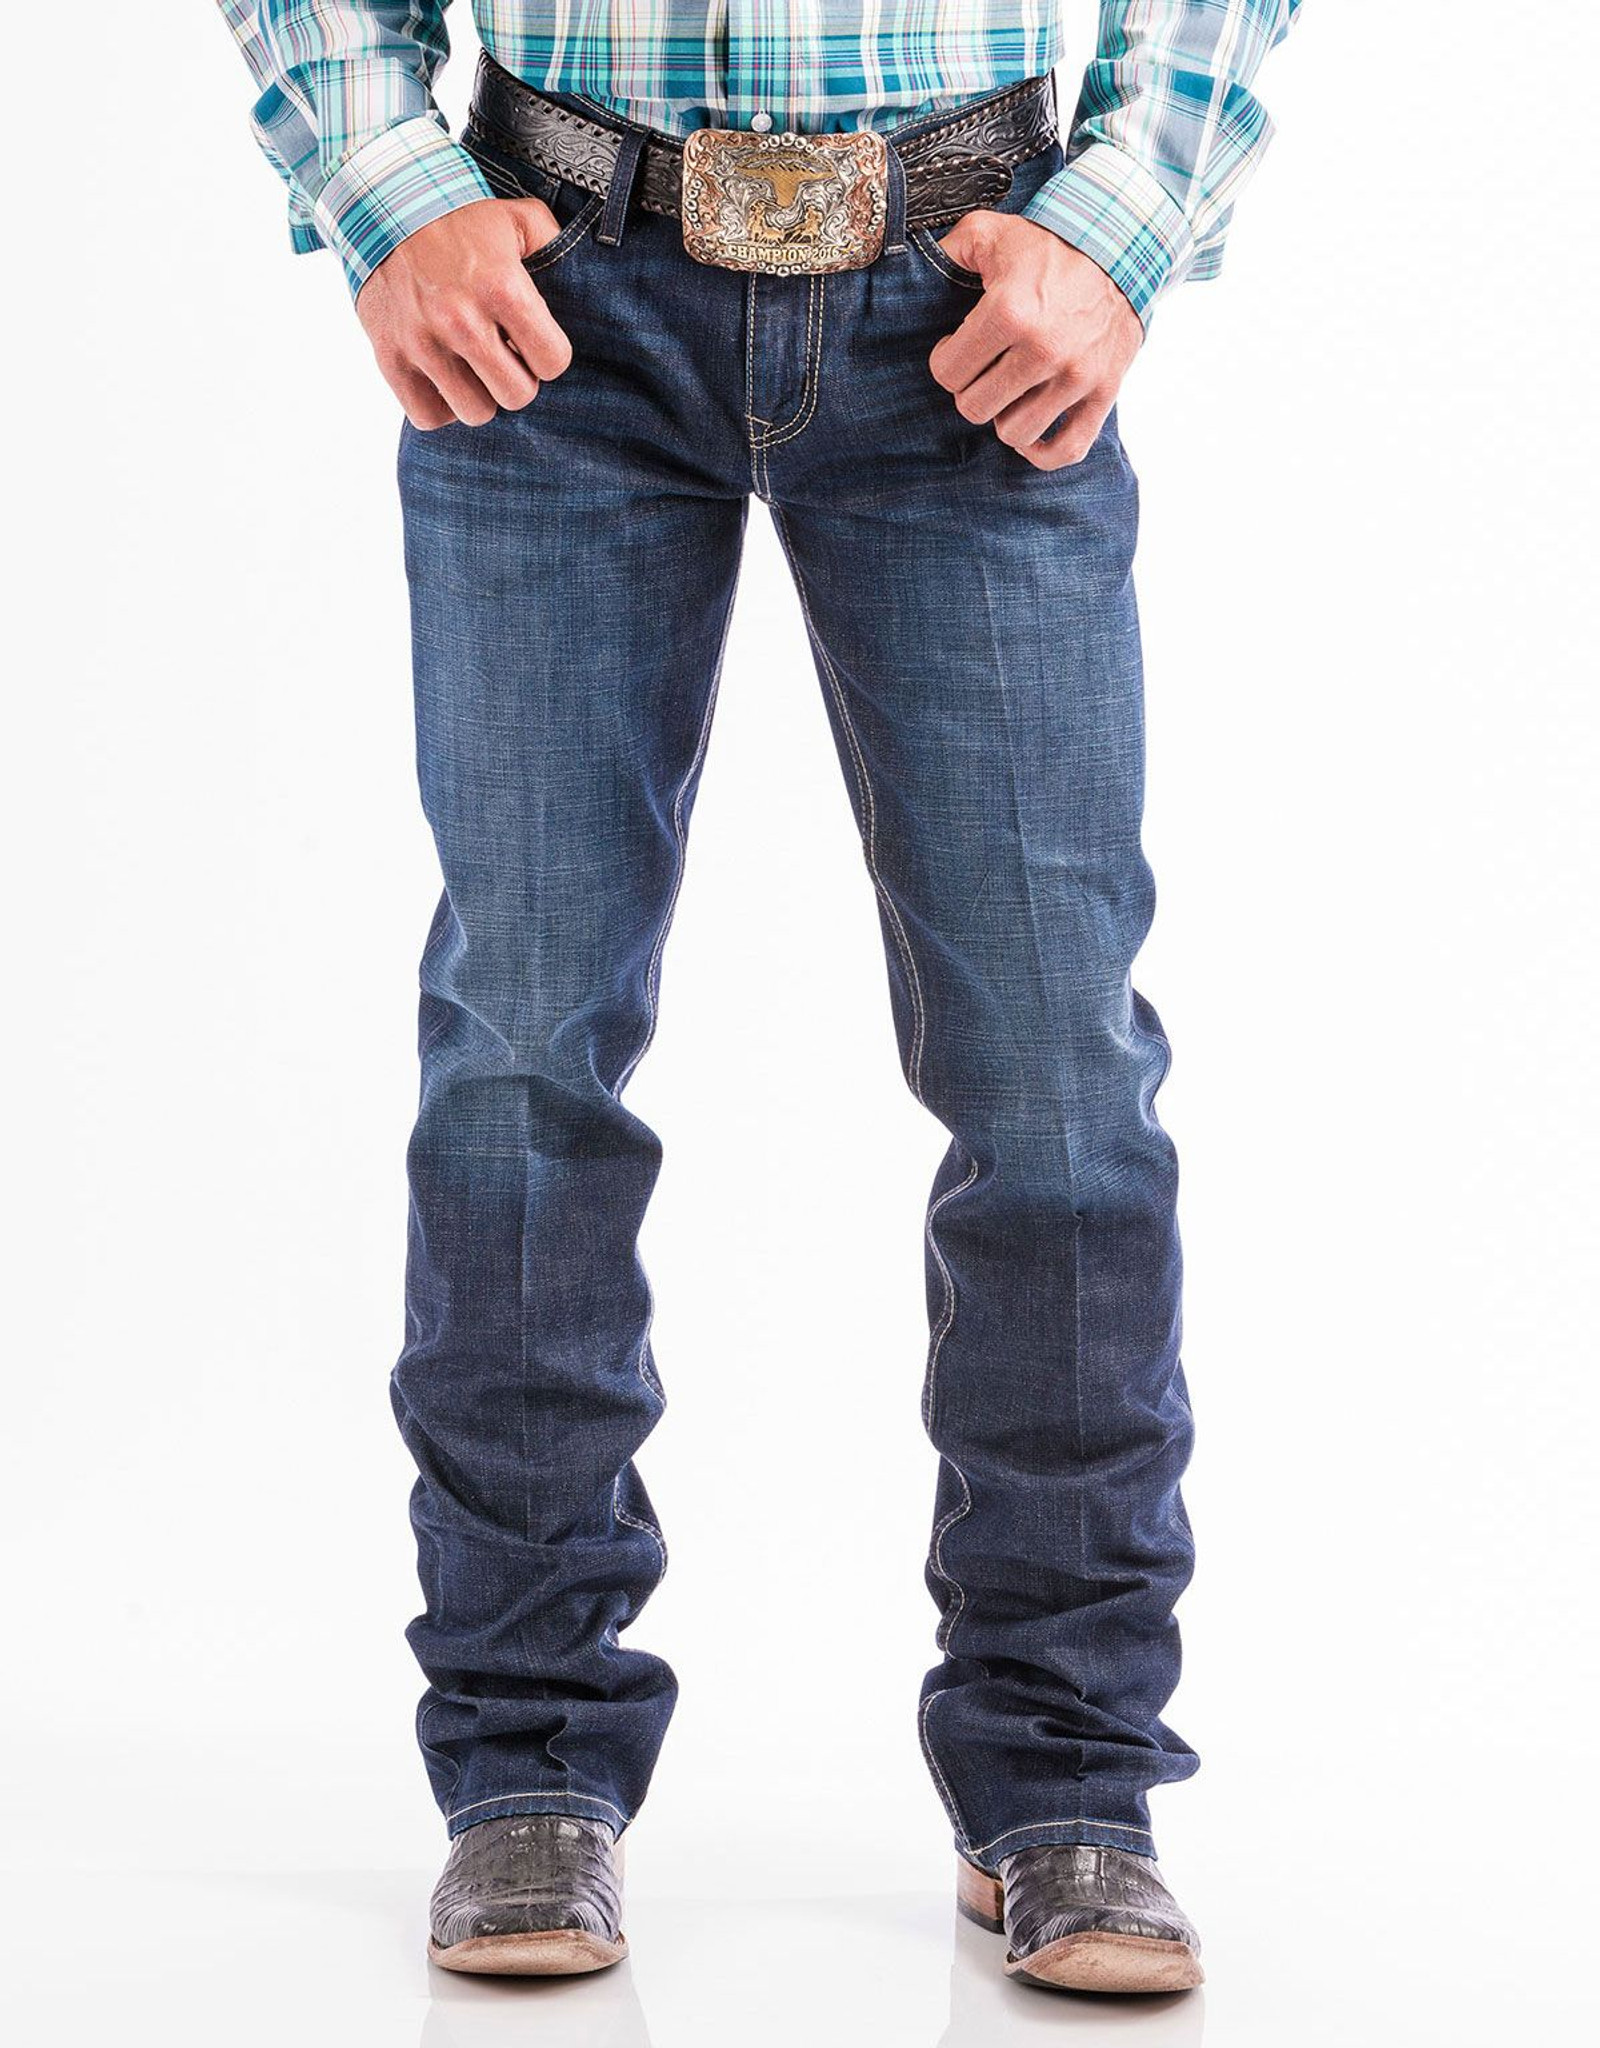 Fondsen schors schildpad Cinch Ian Jeans for Men from Langston's - Dark Stonewash